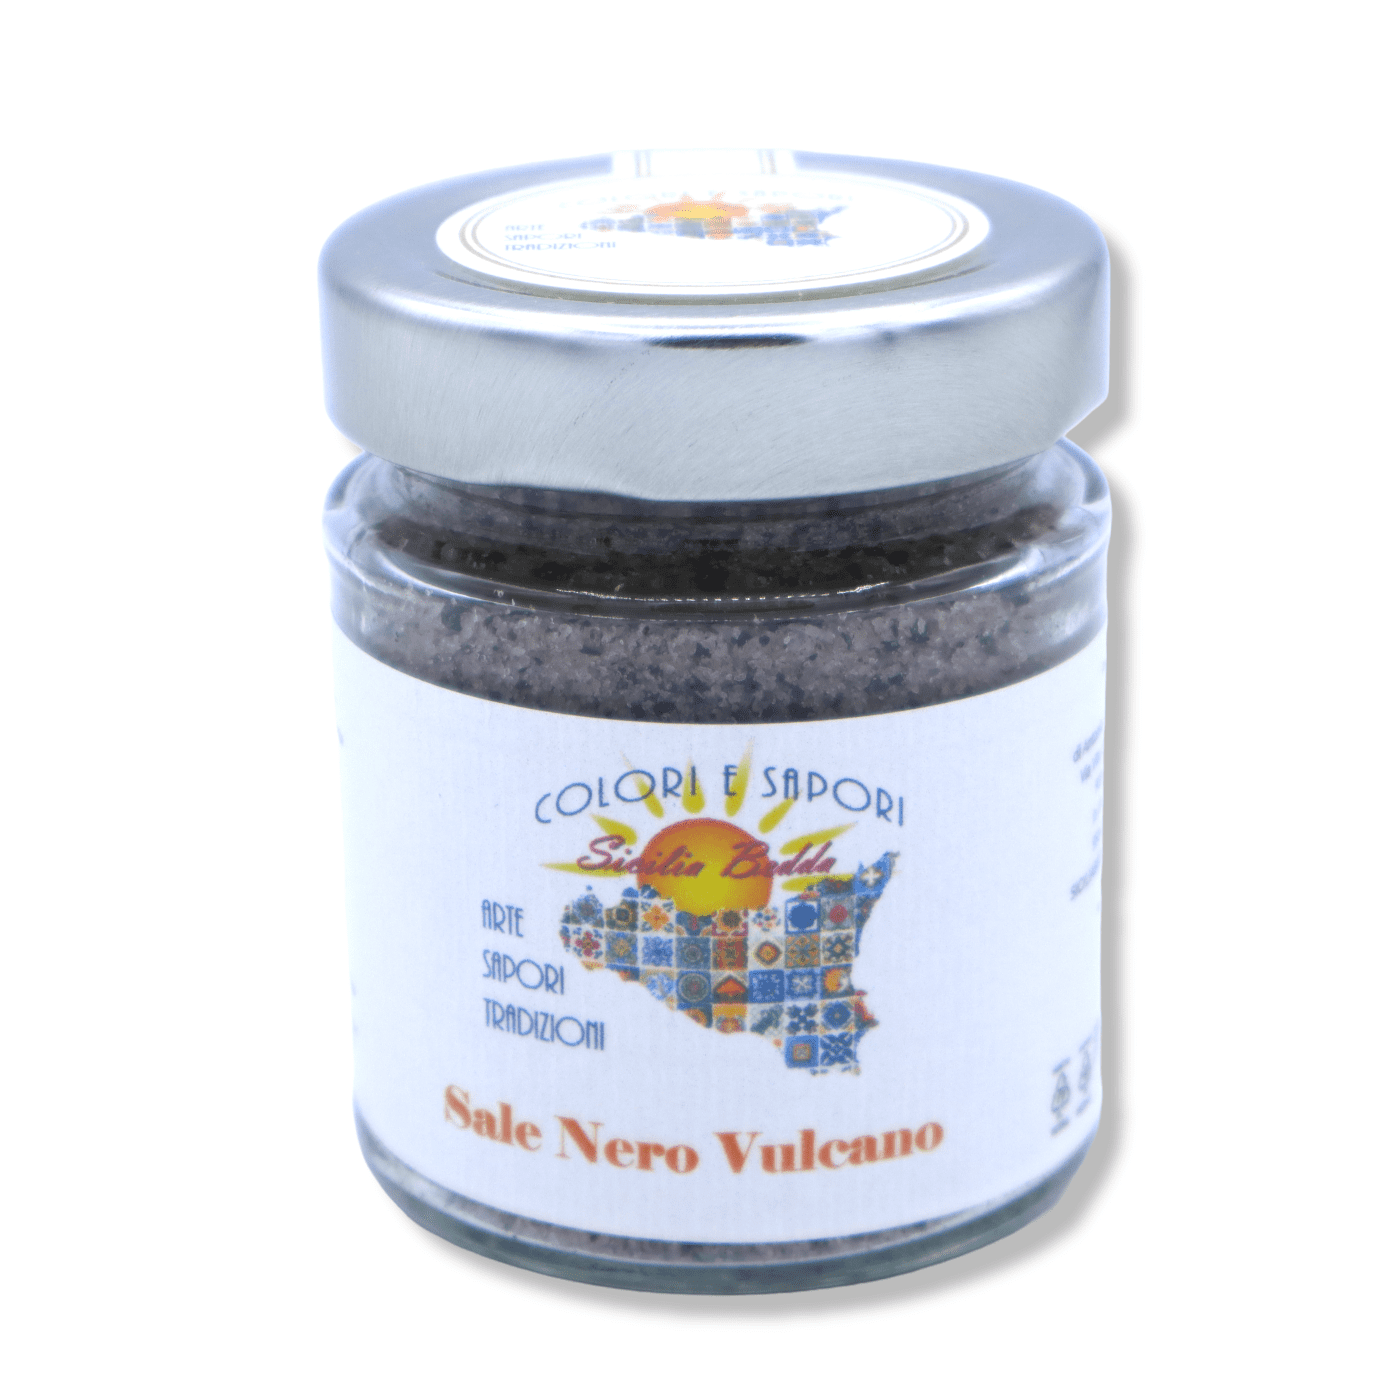 Volcano Black Salt, 150g